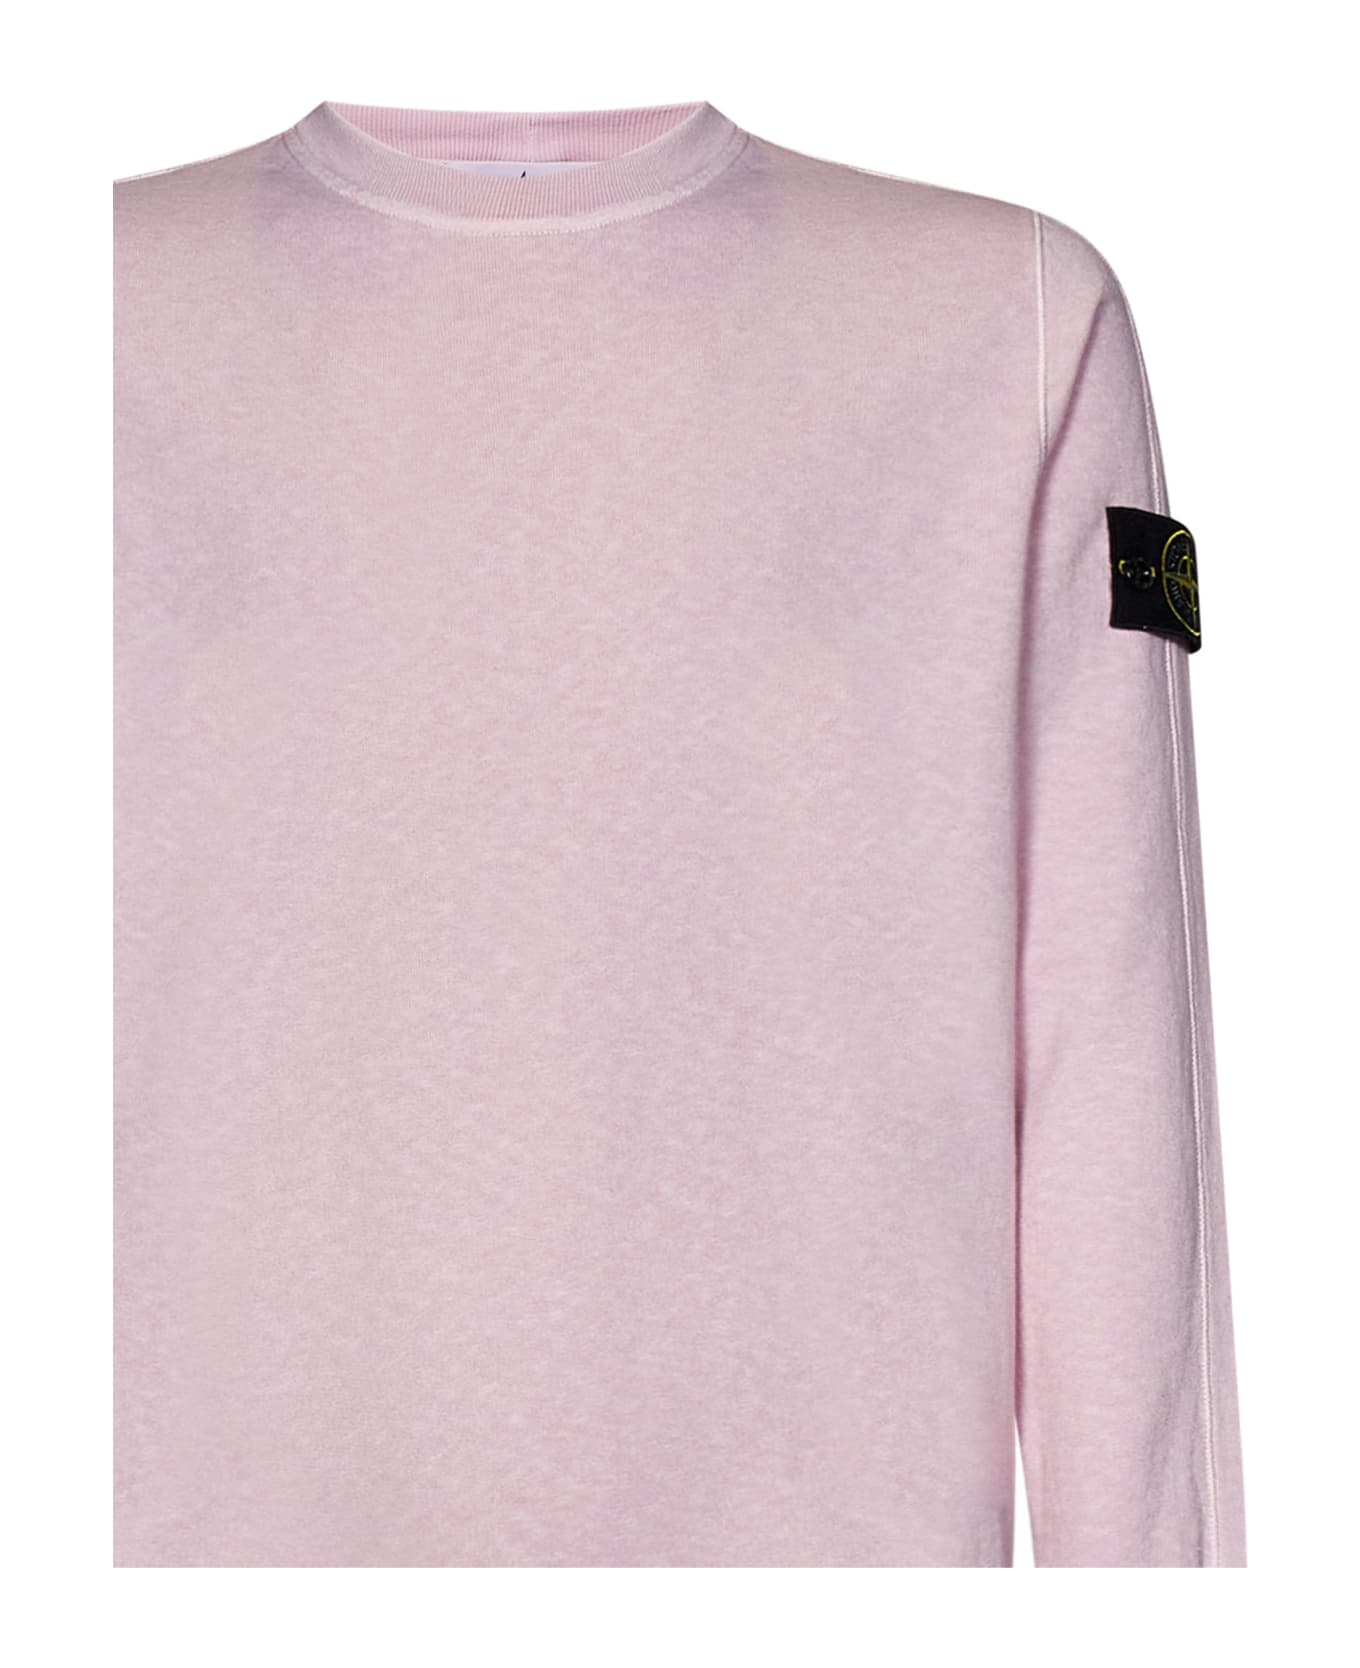 Stone Island Sweatshirt - Pink フリース